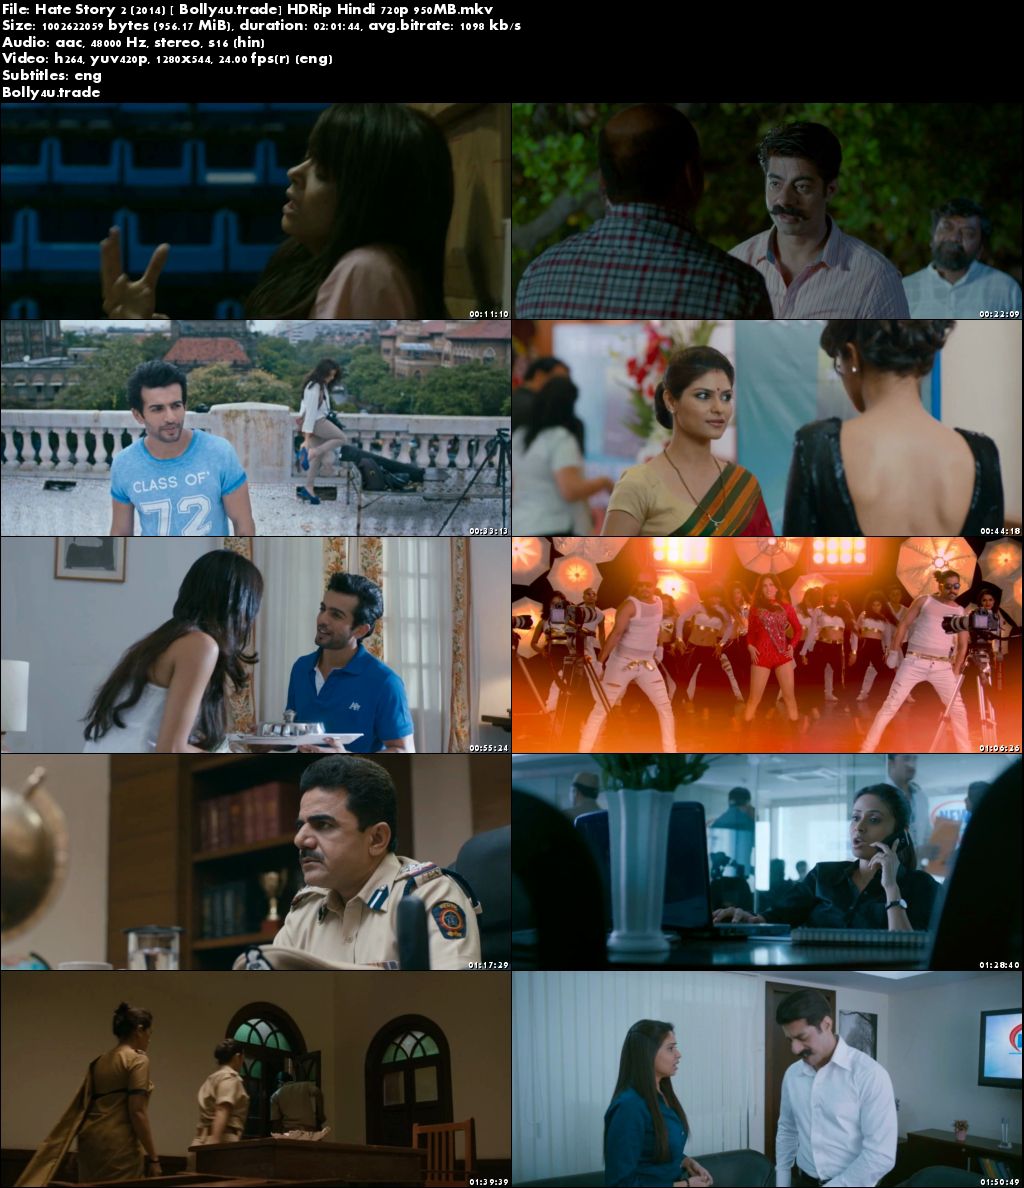 Hate Story 2 2014 HDRip 300Mb Full Hindi Movie Download 480p ESub